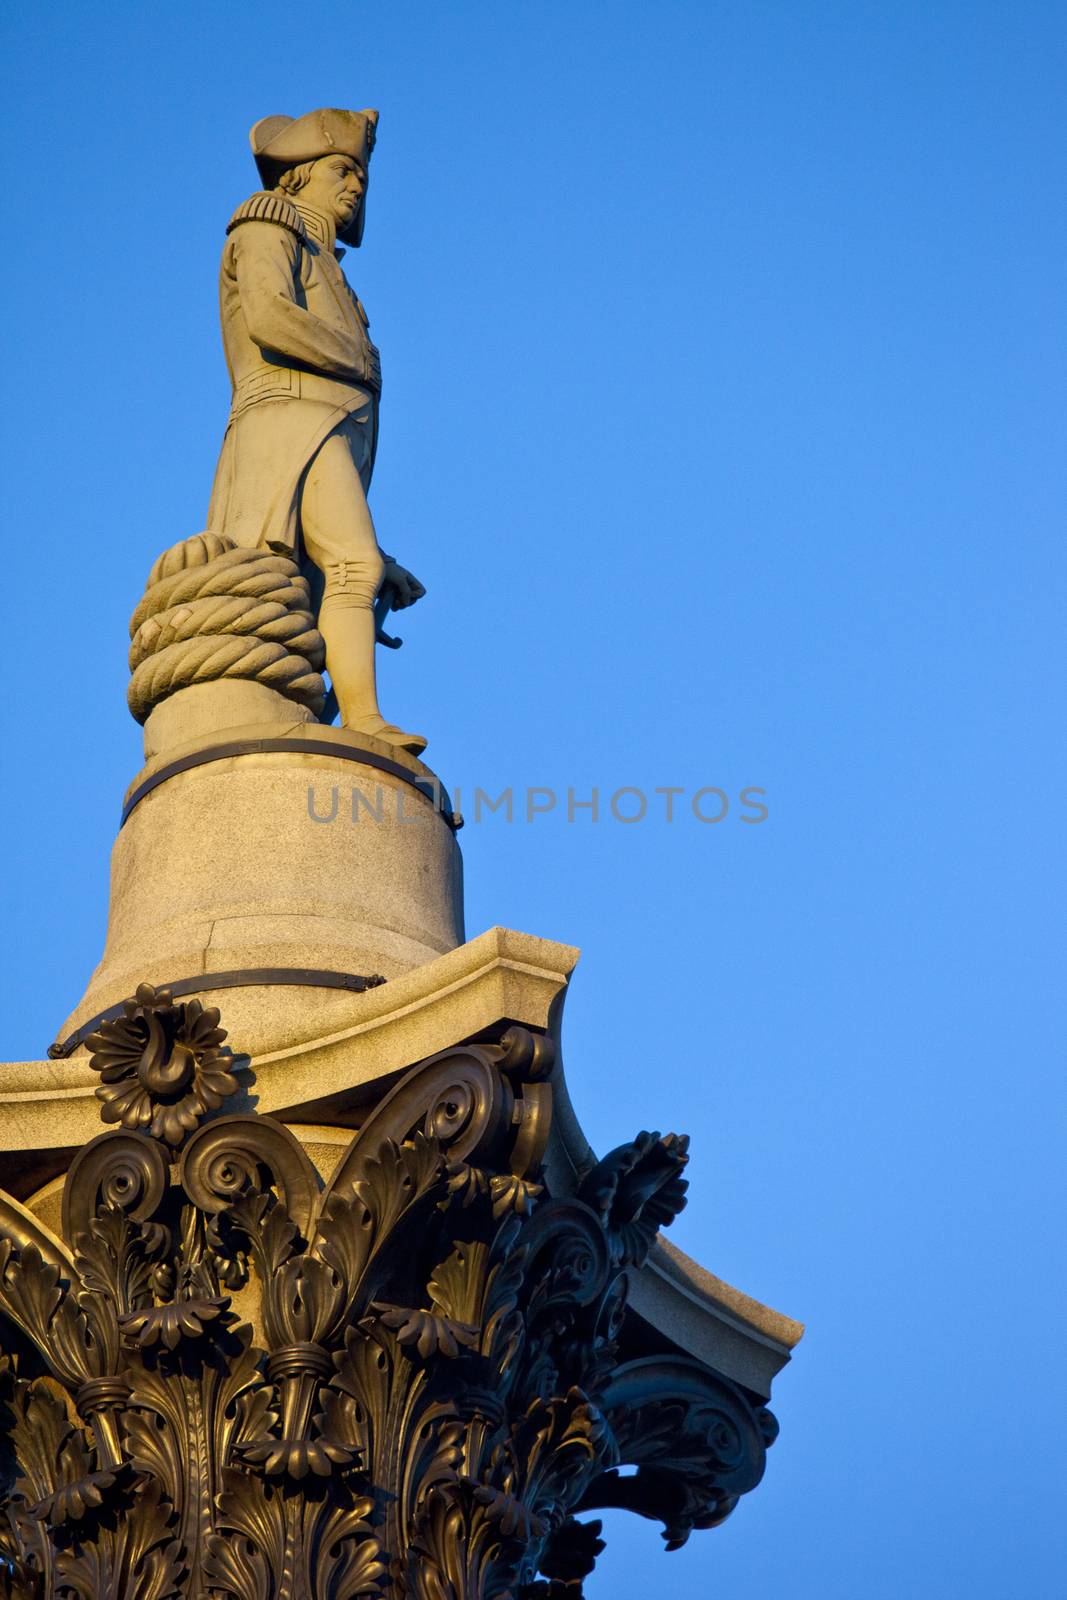 Admiral Nelson ontop of Nelson's Column in Trafalgar Square, London.